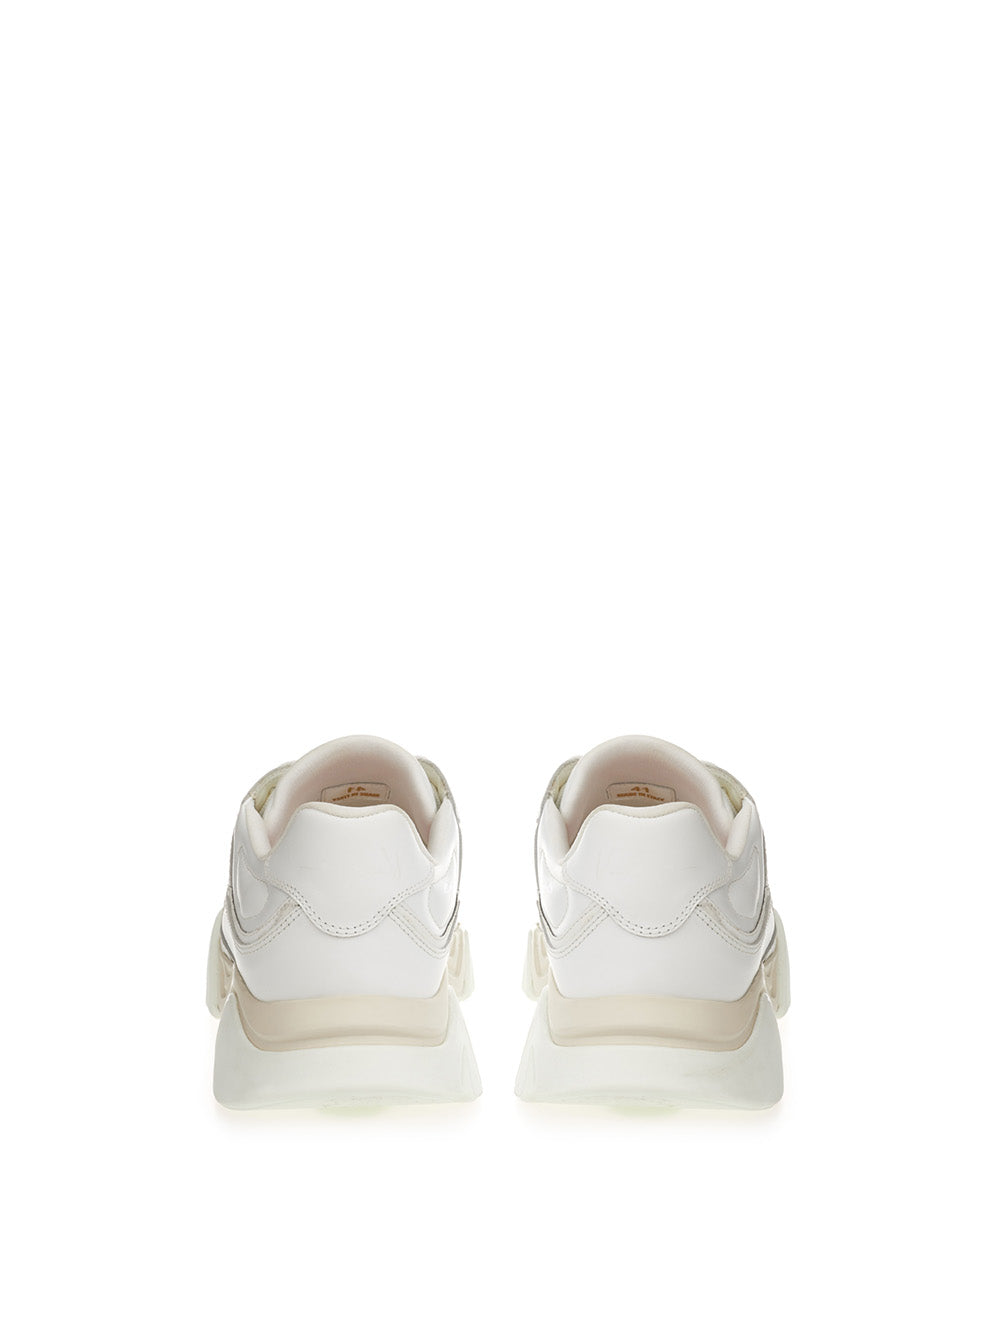 White Versace sneakers